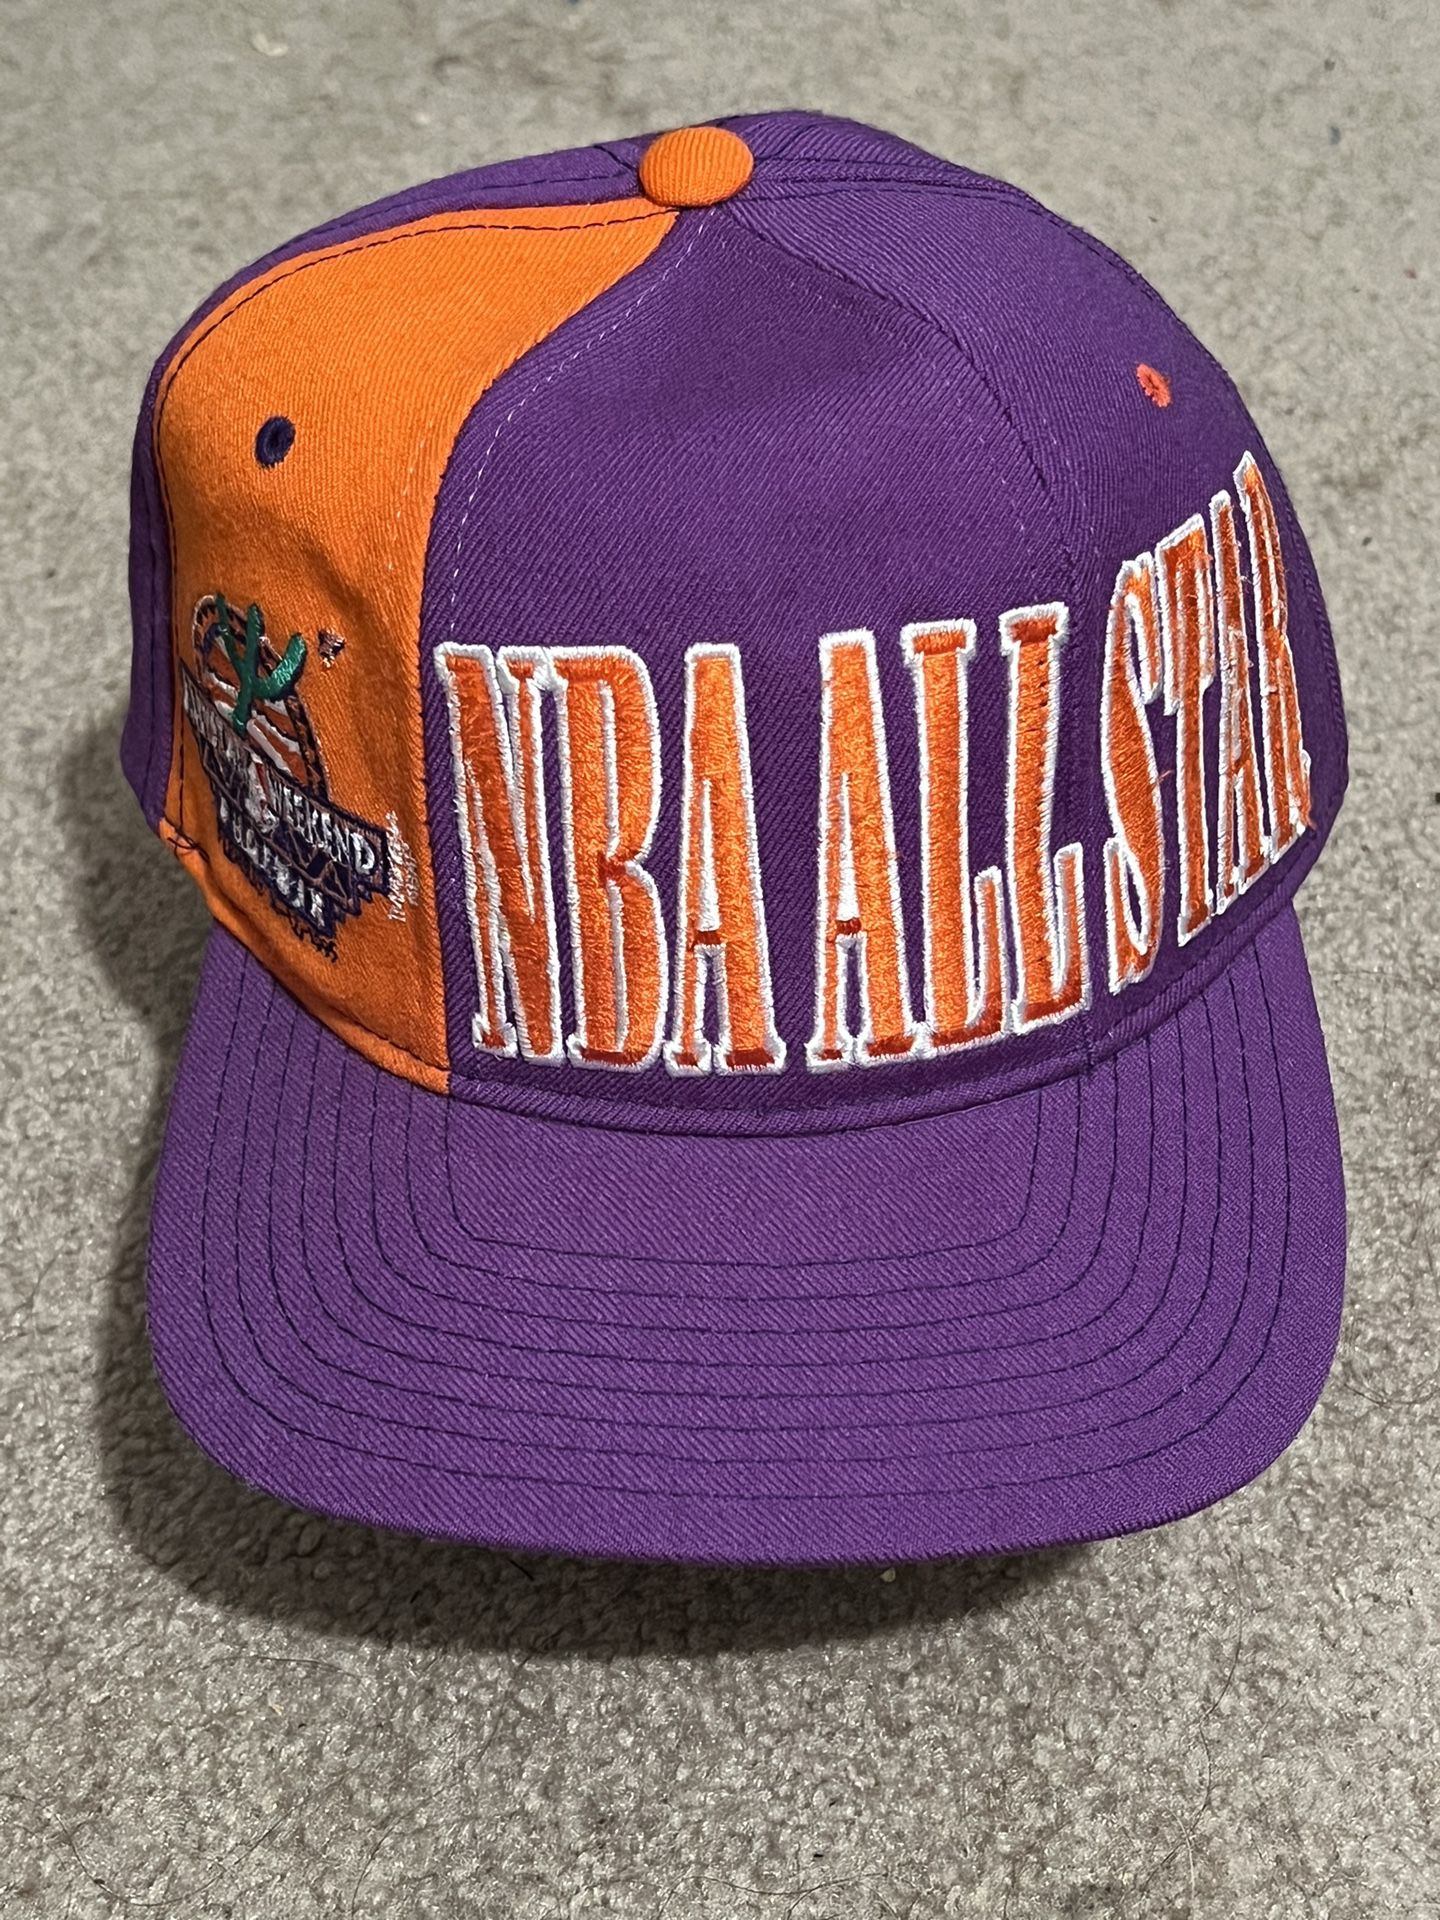 2 RARE 1995 NBA All Star Weekend SnapBack Hats Caps - Never Worn